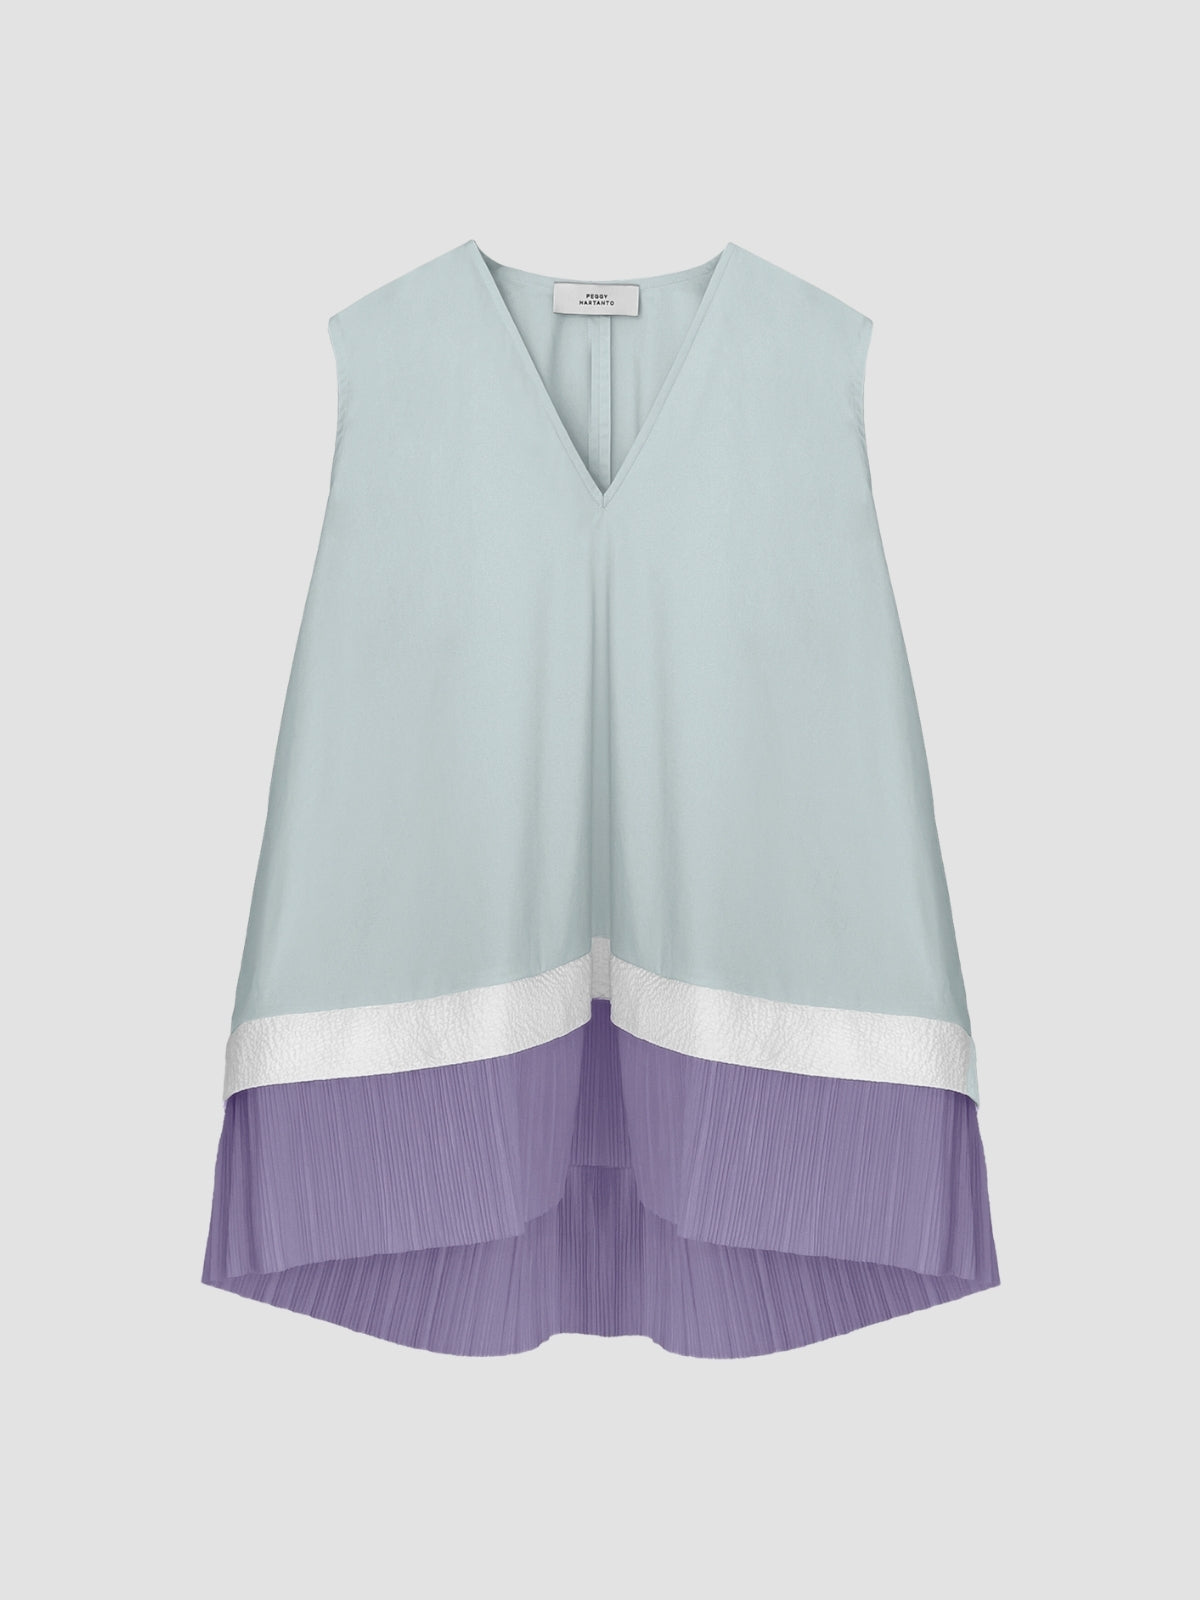 Sky blue Mikoshi blouse with lavender pleats